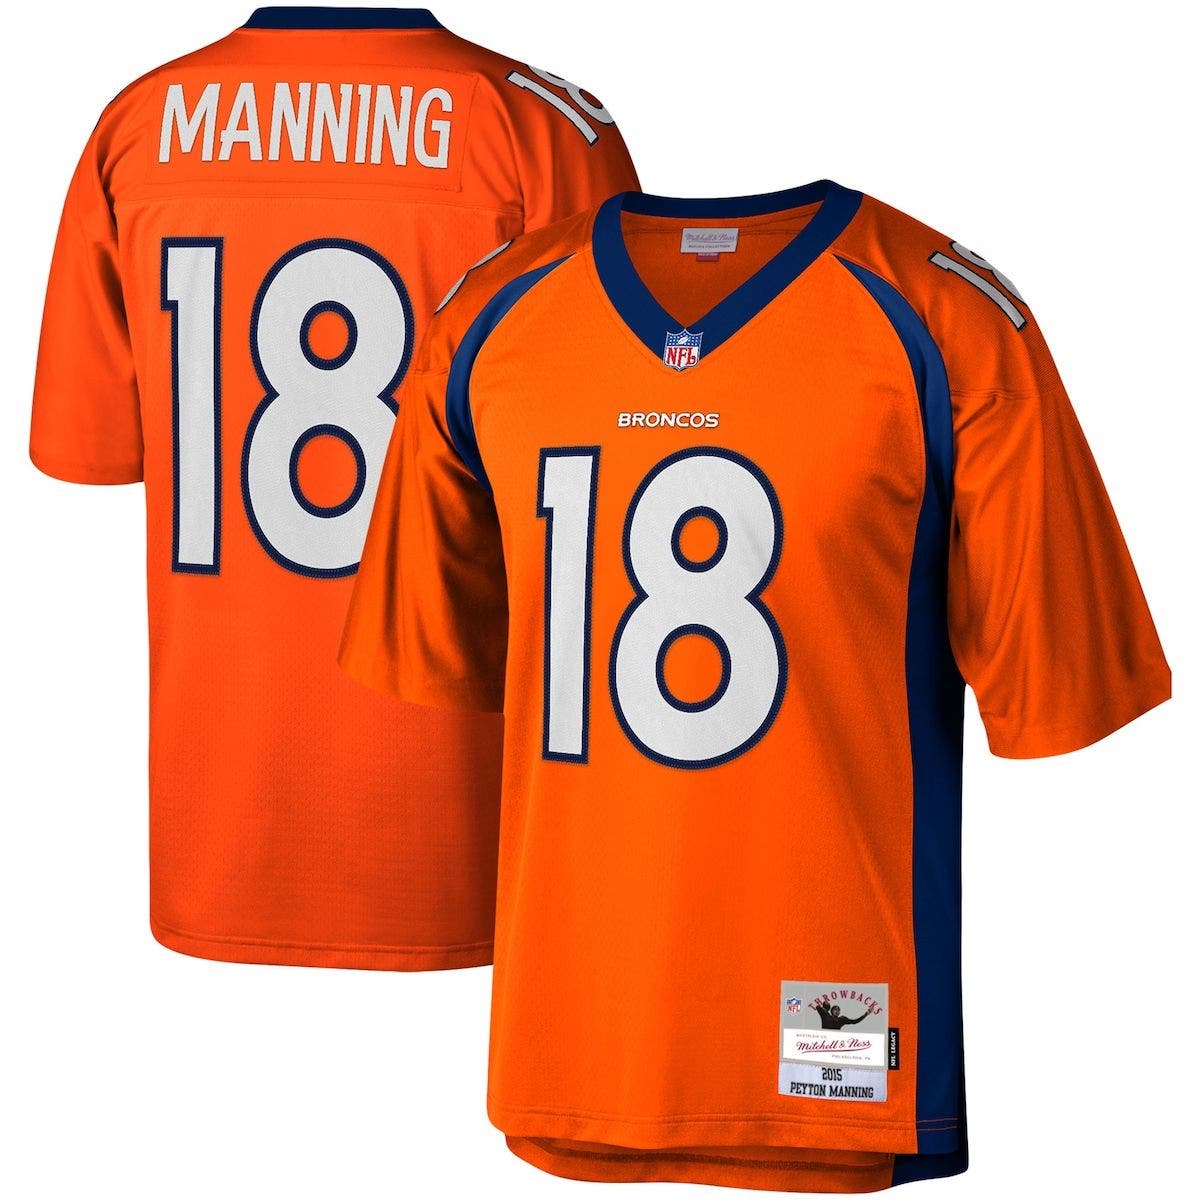 Nordstrom Men Sport & Swimwear Sportswear Sports Tops Mens Peyton Manning Orange Denver Broncos 2015 Legacy Replica Jersey at Nordstrom 